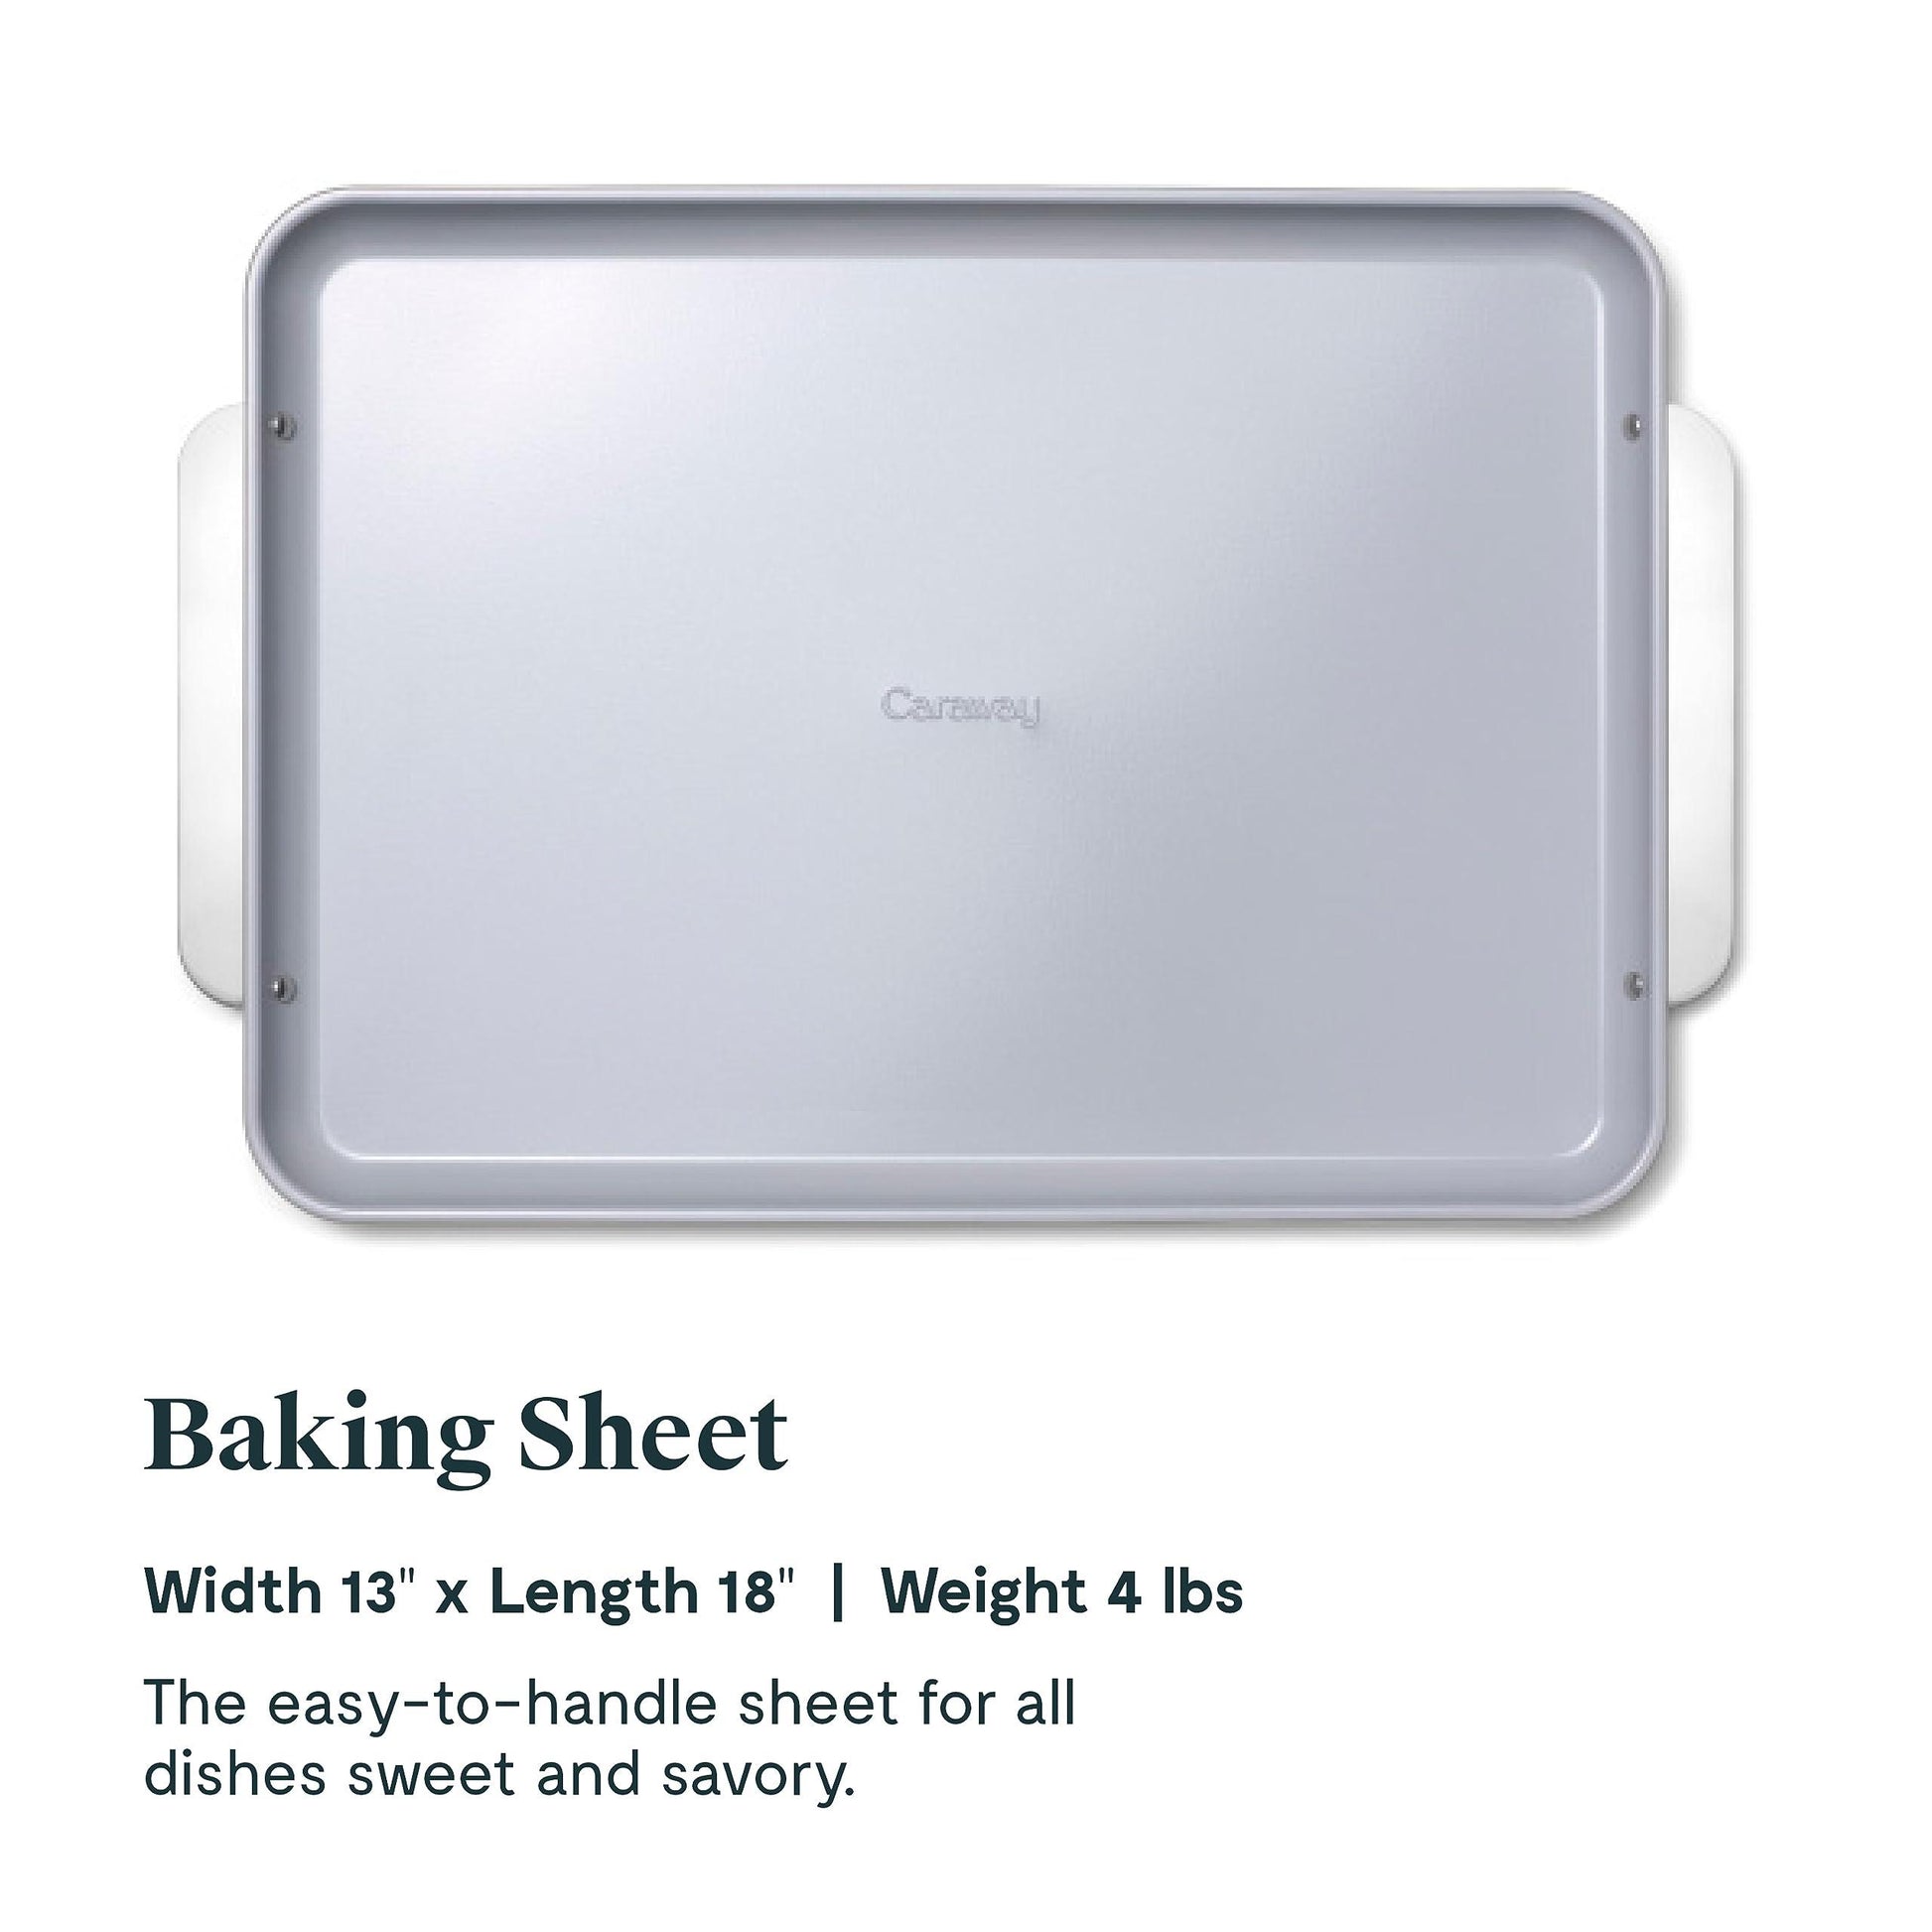 Caraway Non-Stick Ceramic Baking Sheet - Naturally Slick Ceramic Coating - Non-Toxic, PTFE & PFOA Free - Perfect for Baking, Roasting, and More - Large - Navy - CookCave